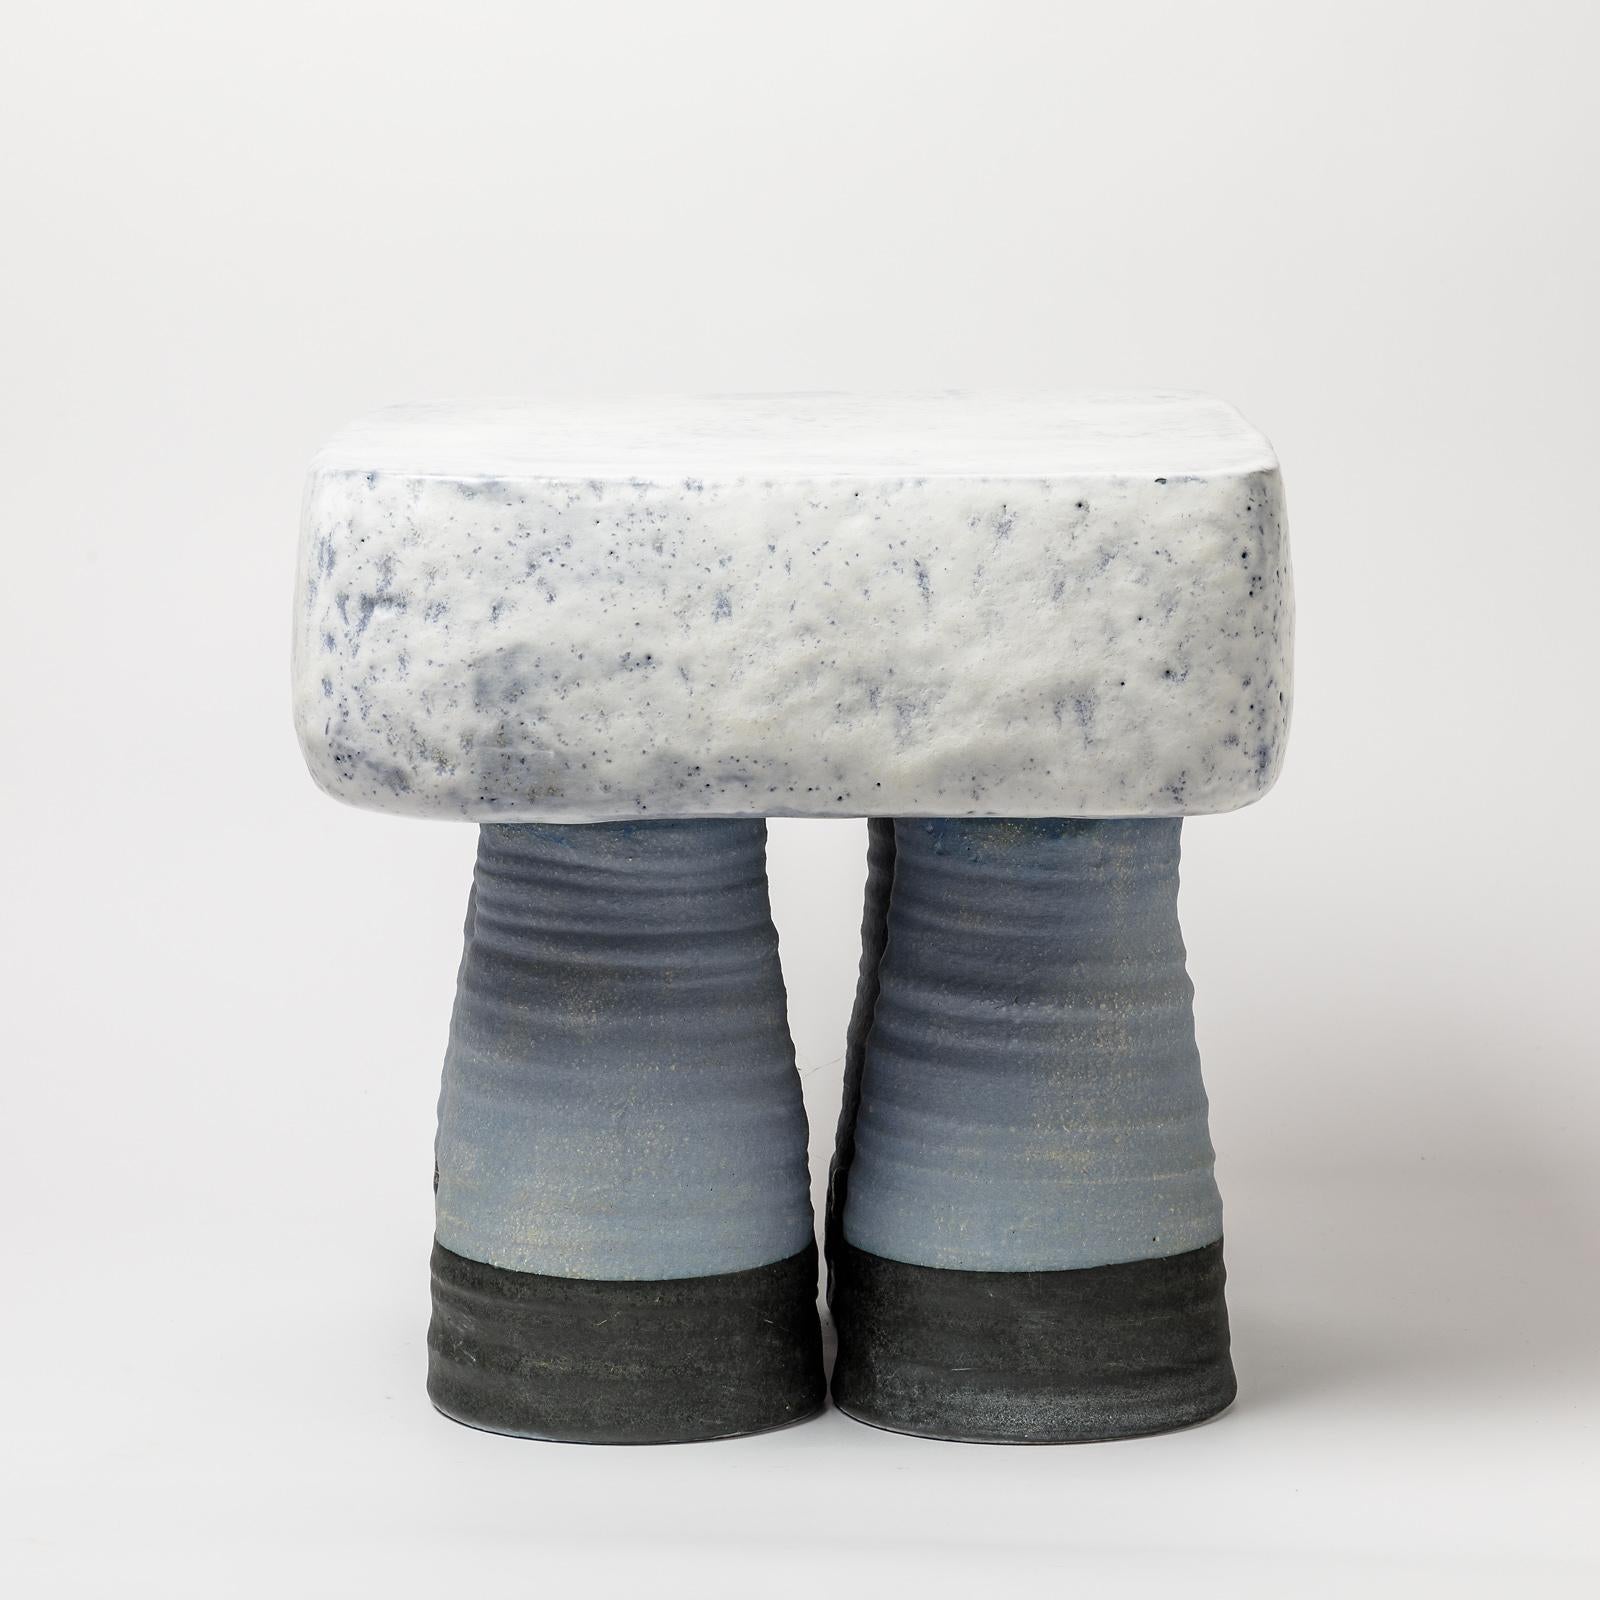 Beaux Arts Ceramic Stool with Blue and White Glazes Decoration by Mia Jensen, circa 2021